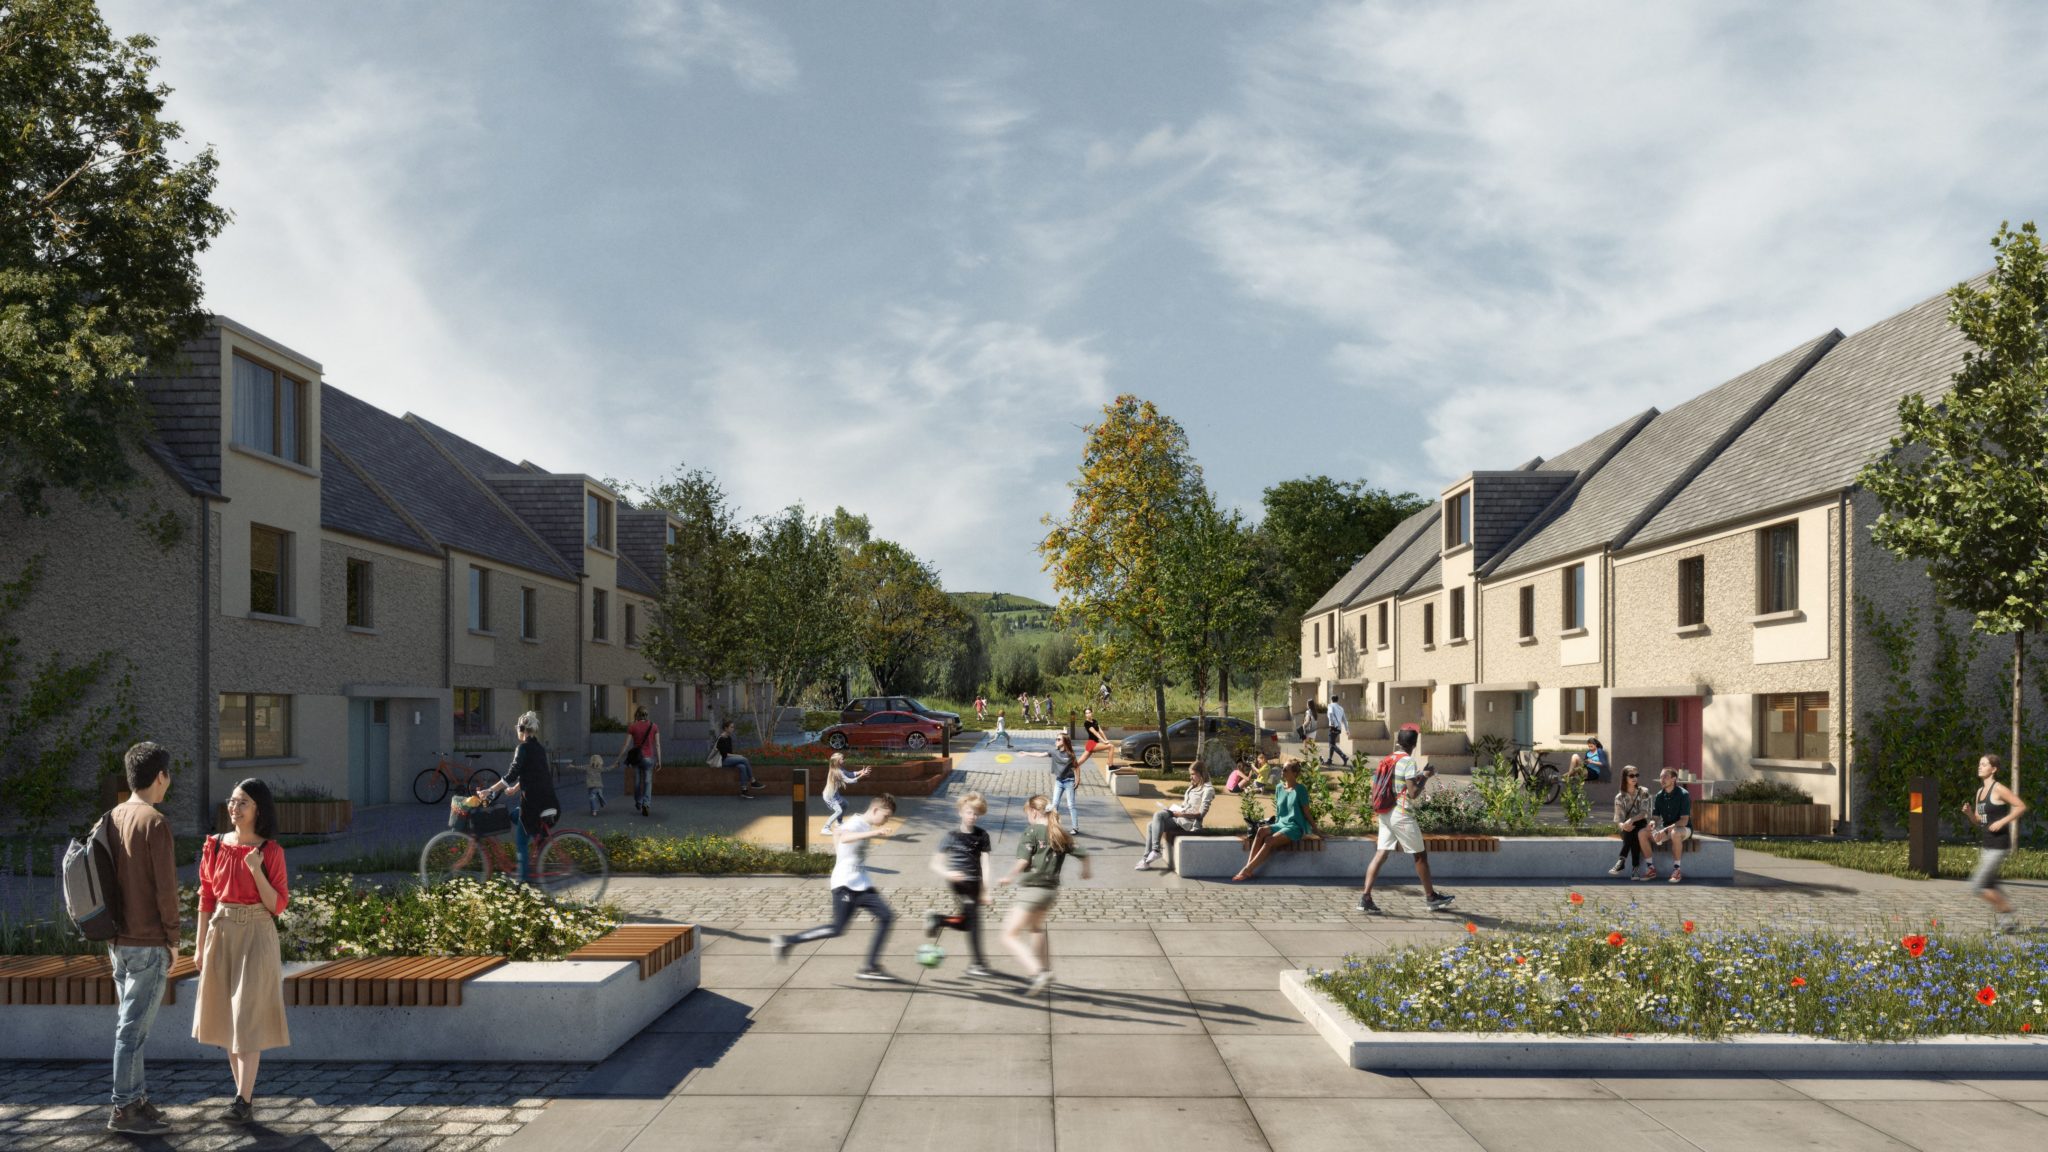 Plans for the new development in Killinarden in Tallaght